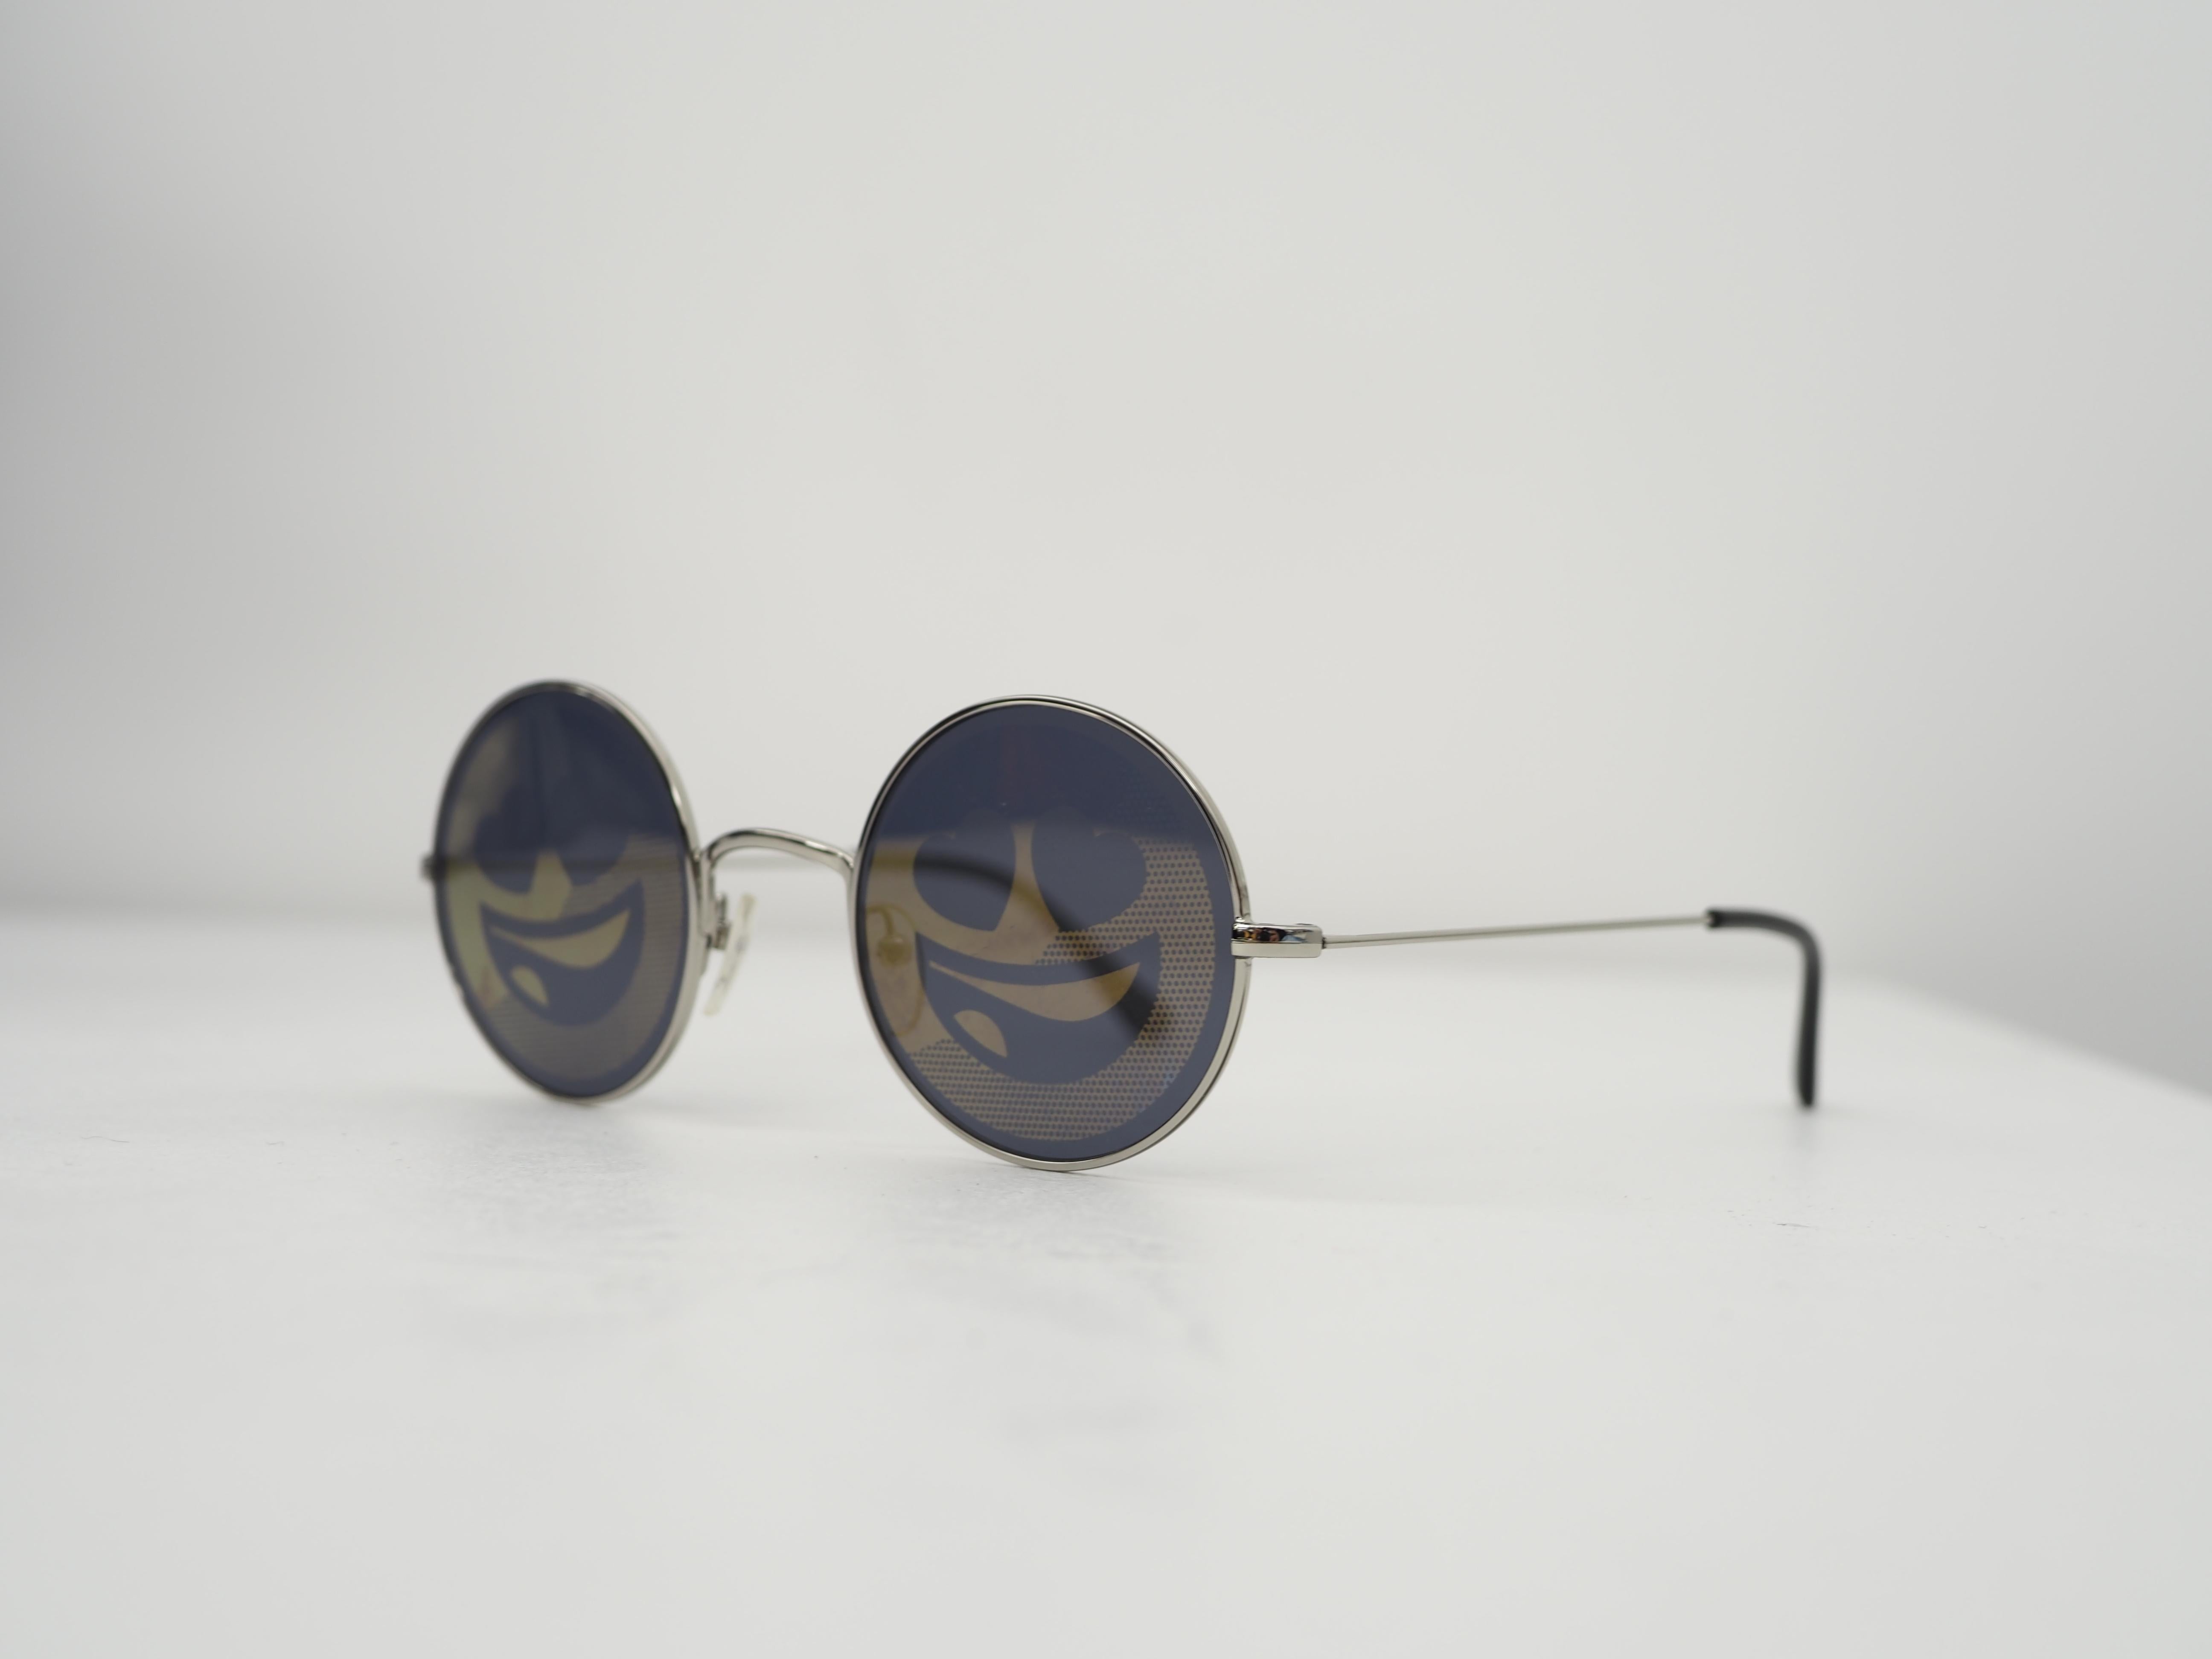 Gray Jeremy Scotto smiles sunglasses For Sale